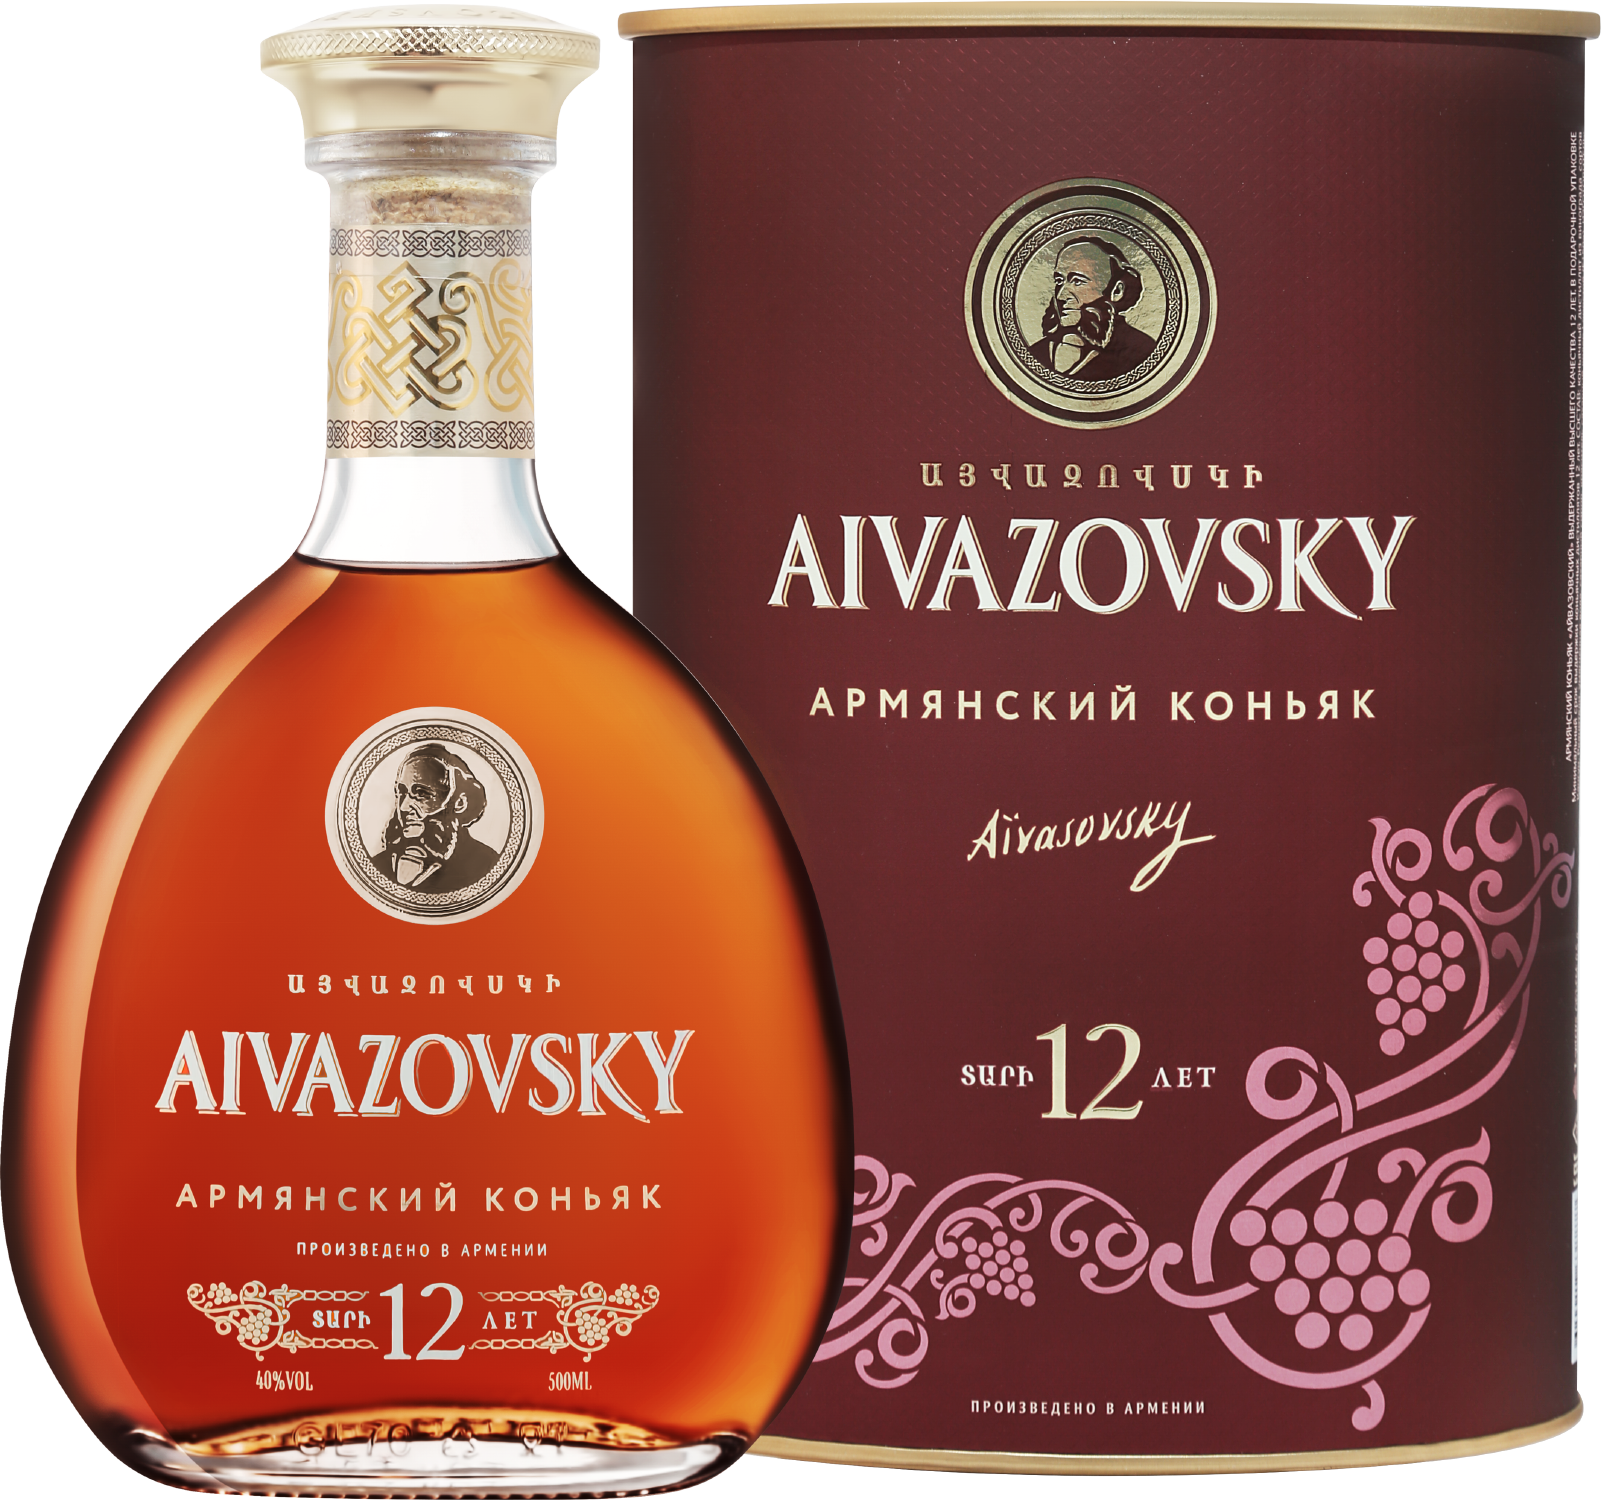 ararat nairi armenian brandy 20 y o gift box Aivazovsky Old Armenian Brandy 12 Y.O. (gift box)